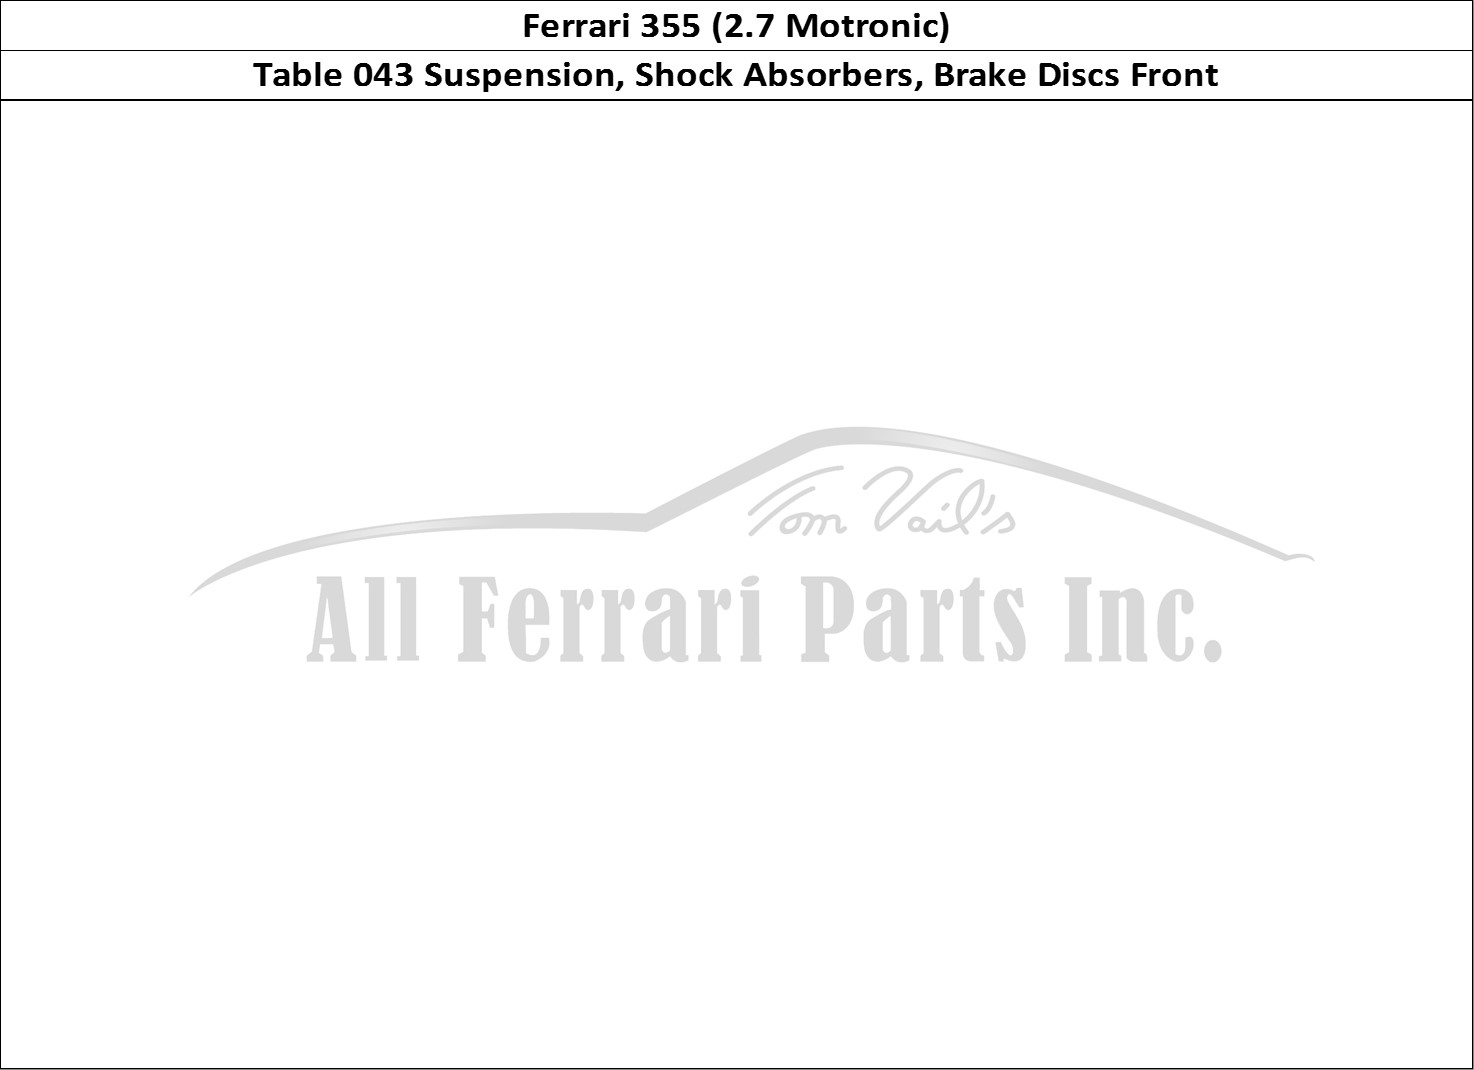 Ferrari Parts Ferrari 355 (2.7 Motronic) Page 043 Front Suspension - Shock